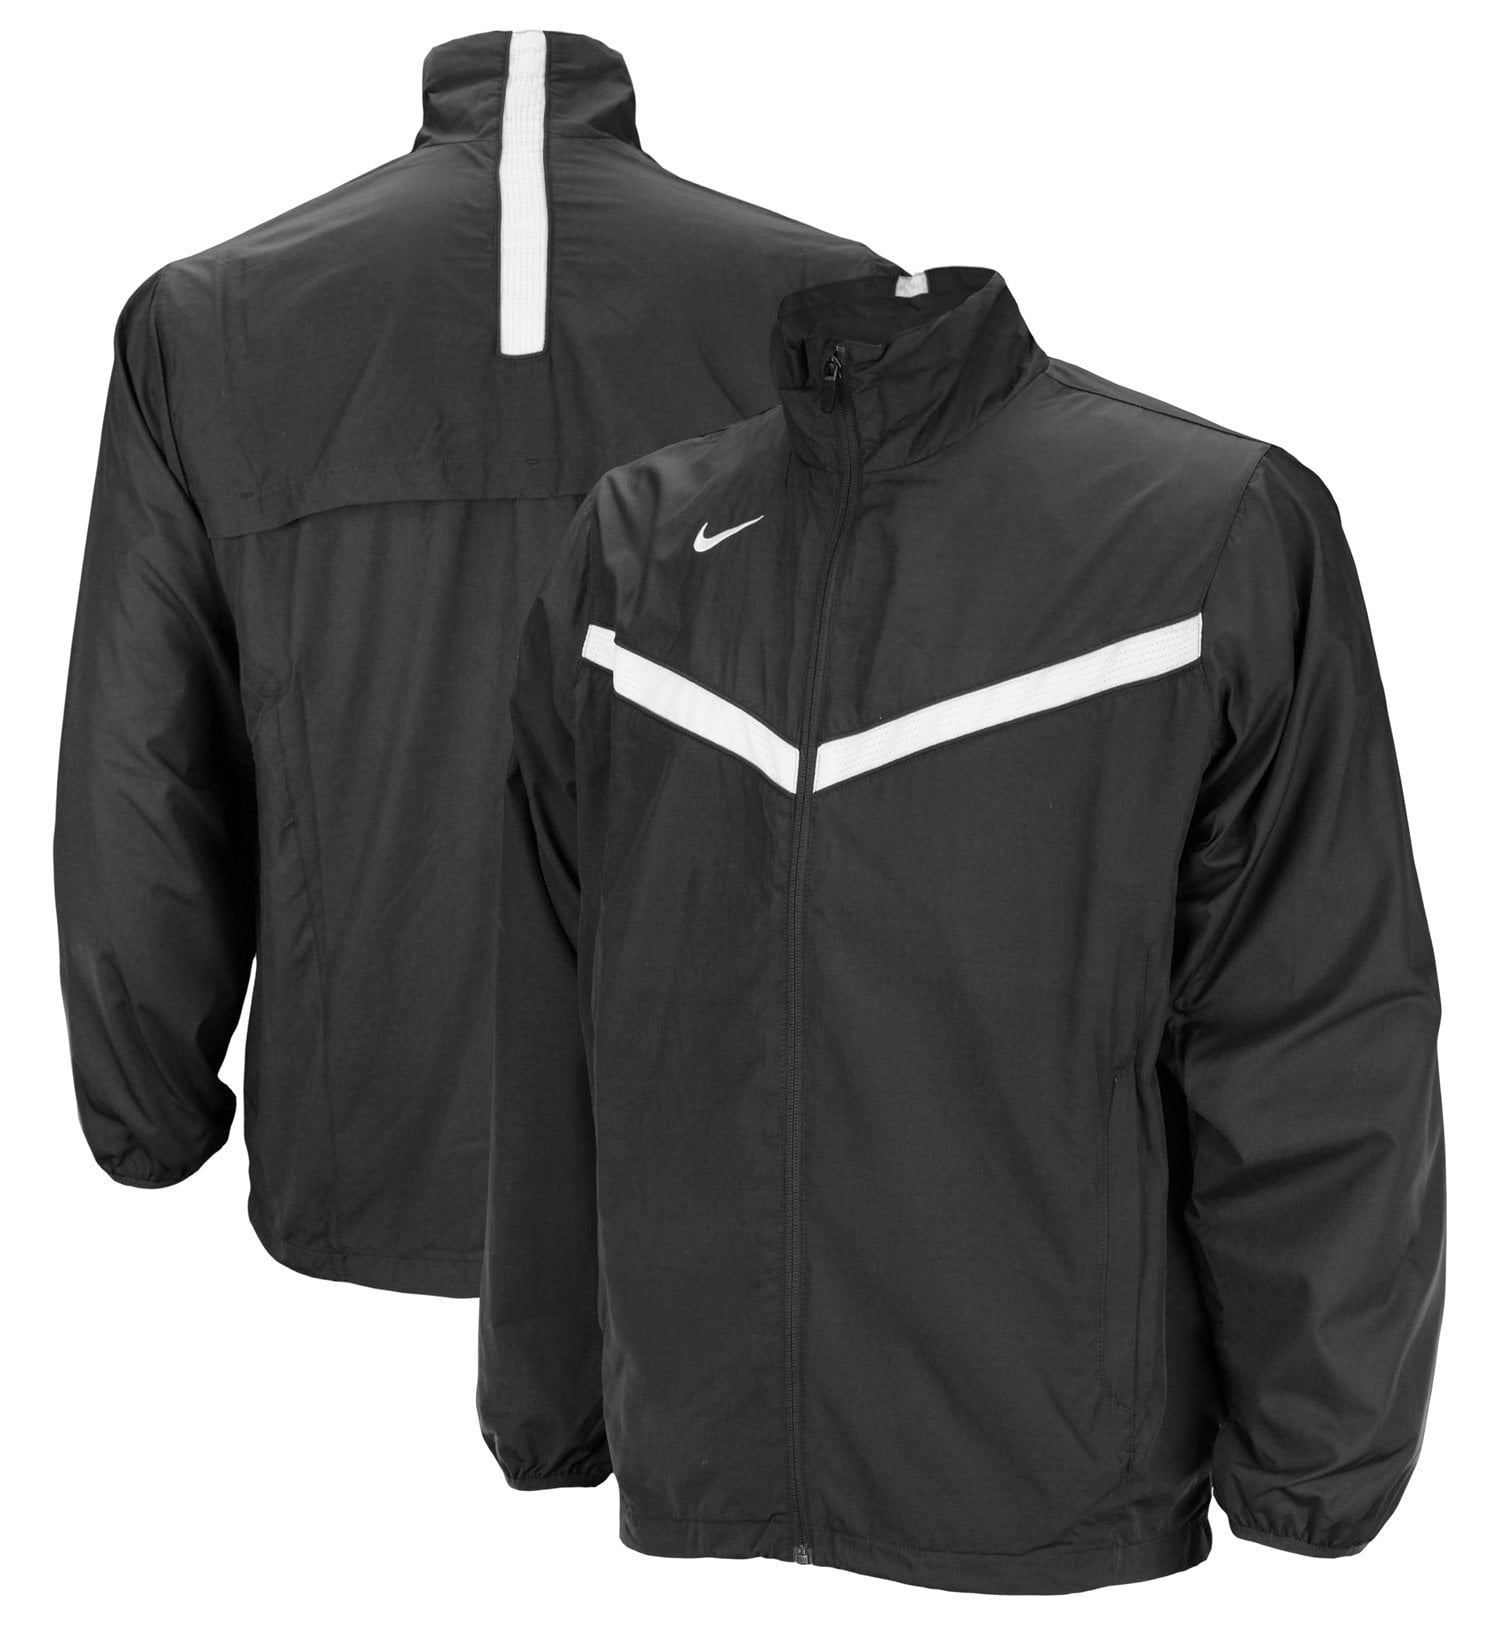 Nike - Nike Men's Championship III Warm-Up Jacket - Many Colors ...